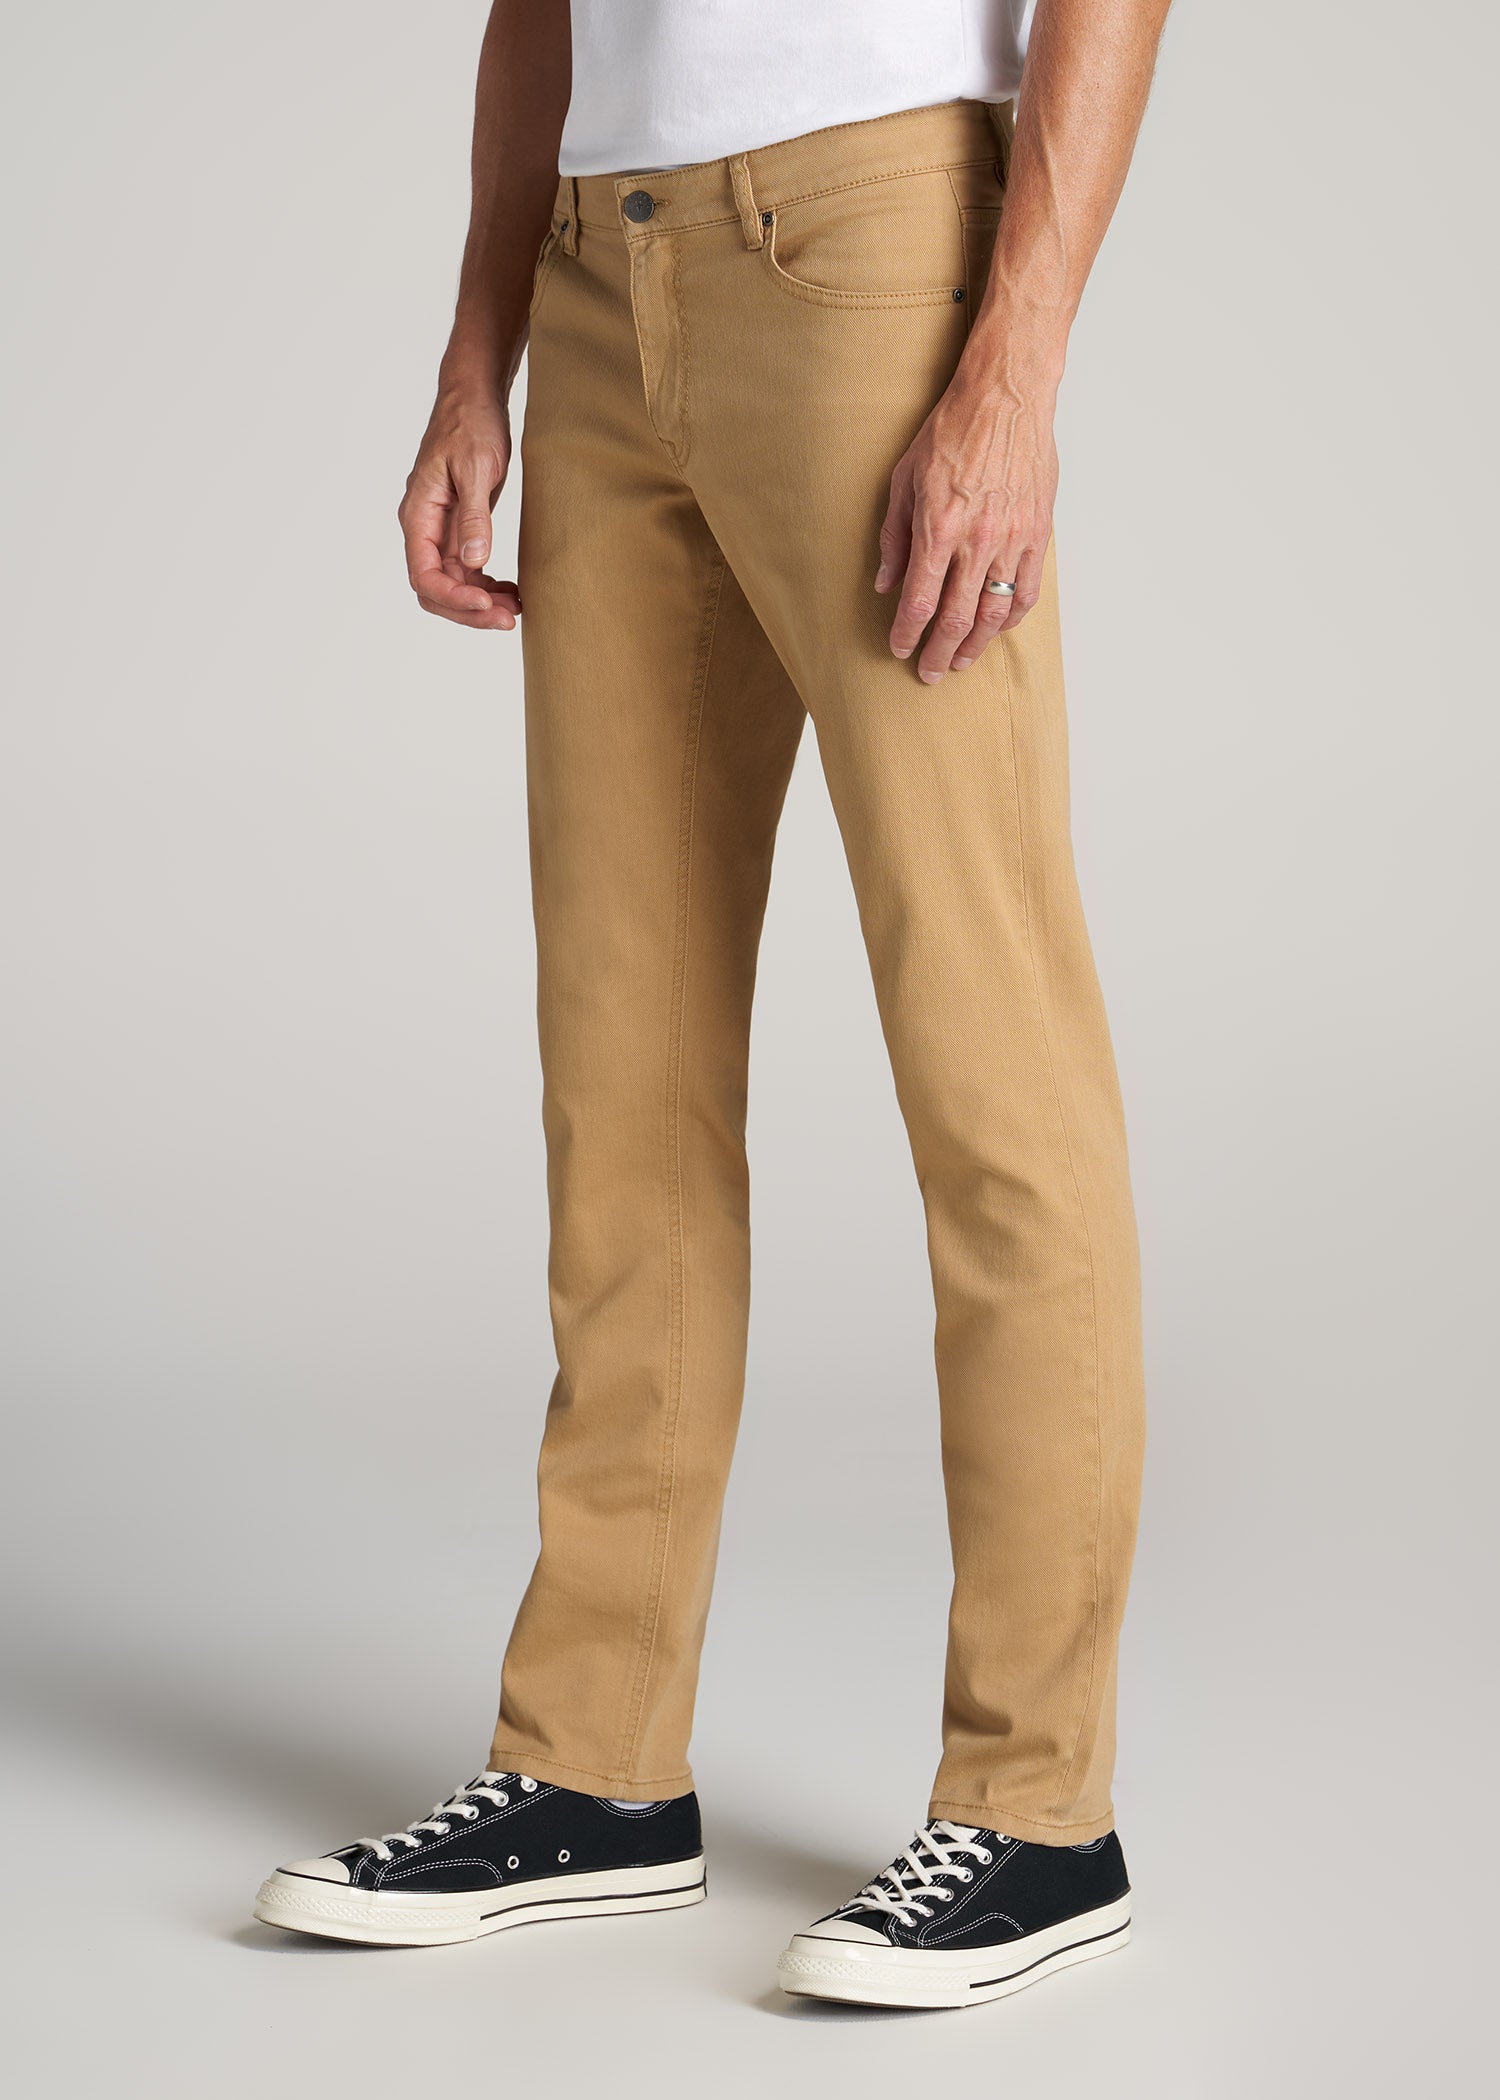       American-Tall-Men-Carman-Tapered-Fit-Jeans-Desert-Sand-side